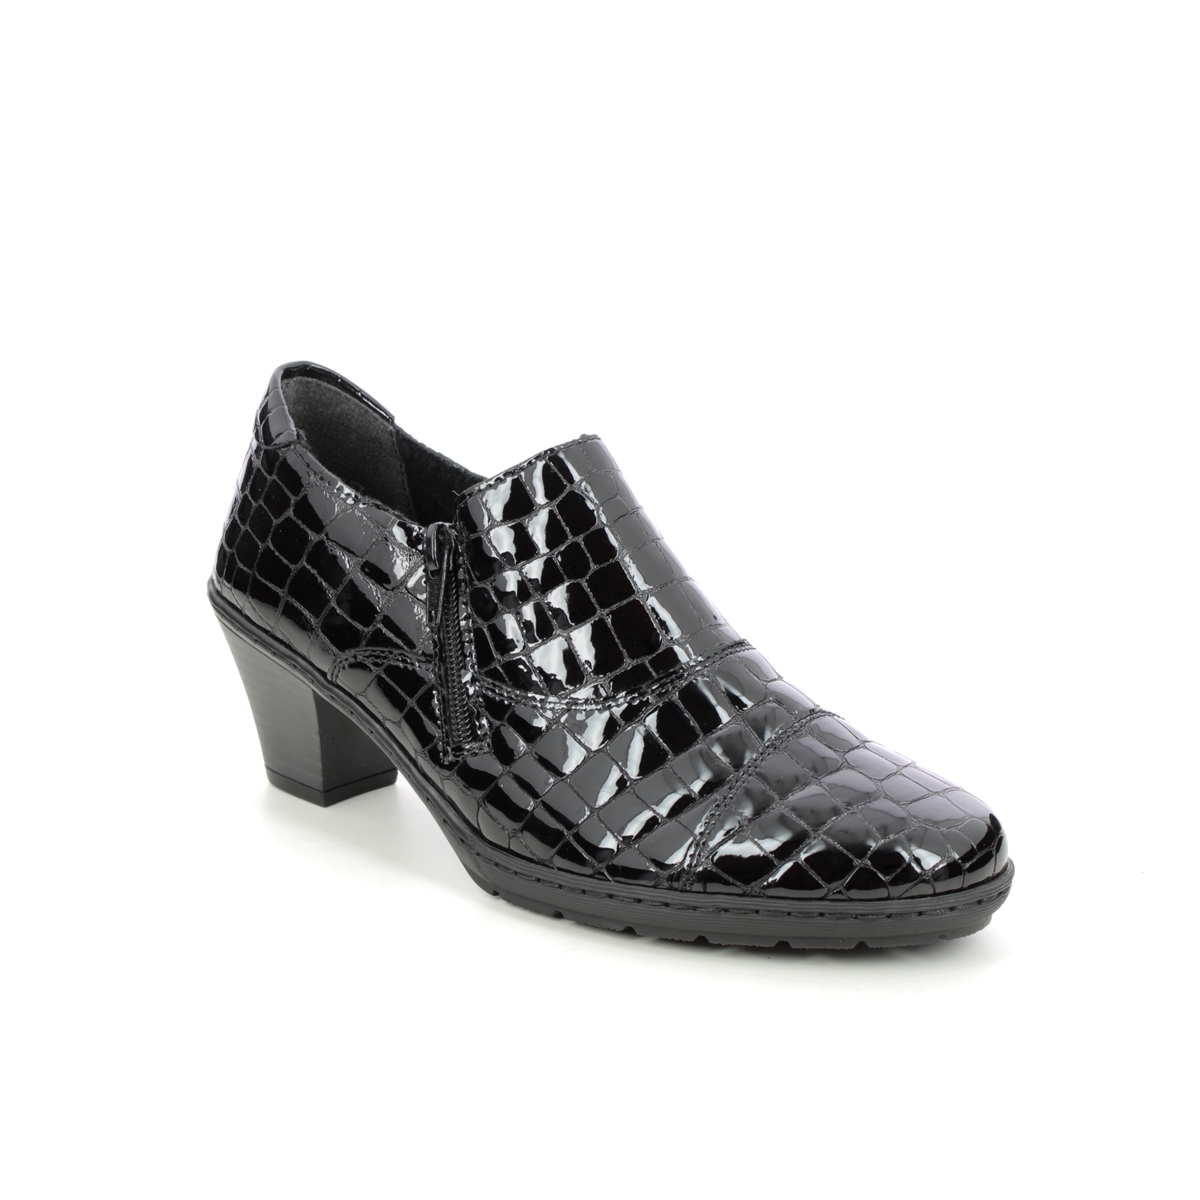 Rieker Addicap Black Croc Womens Shoe-Boots 57173-03 In Size 40 In Plain Black Croc Effect